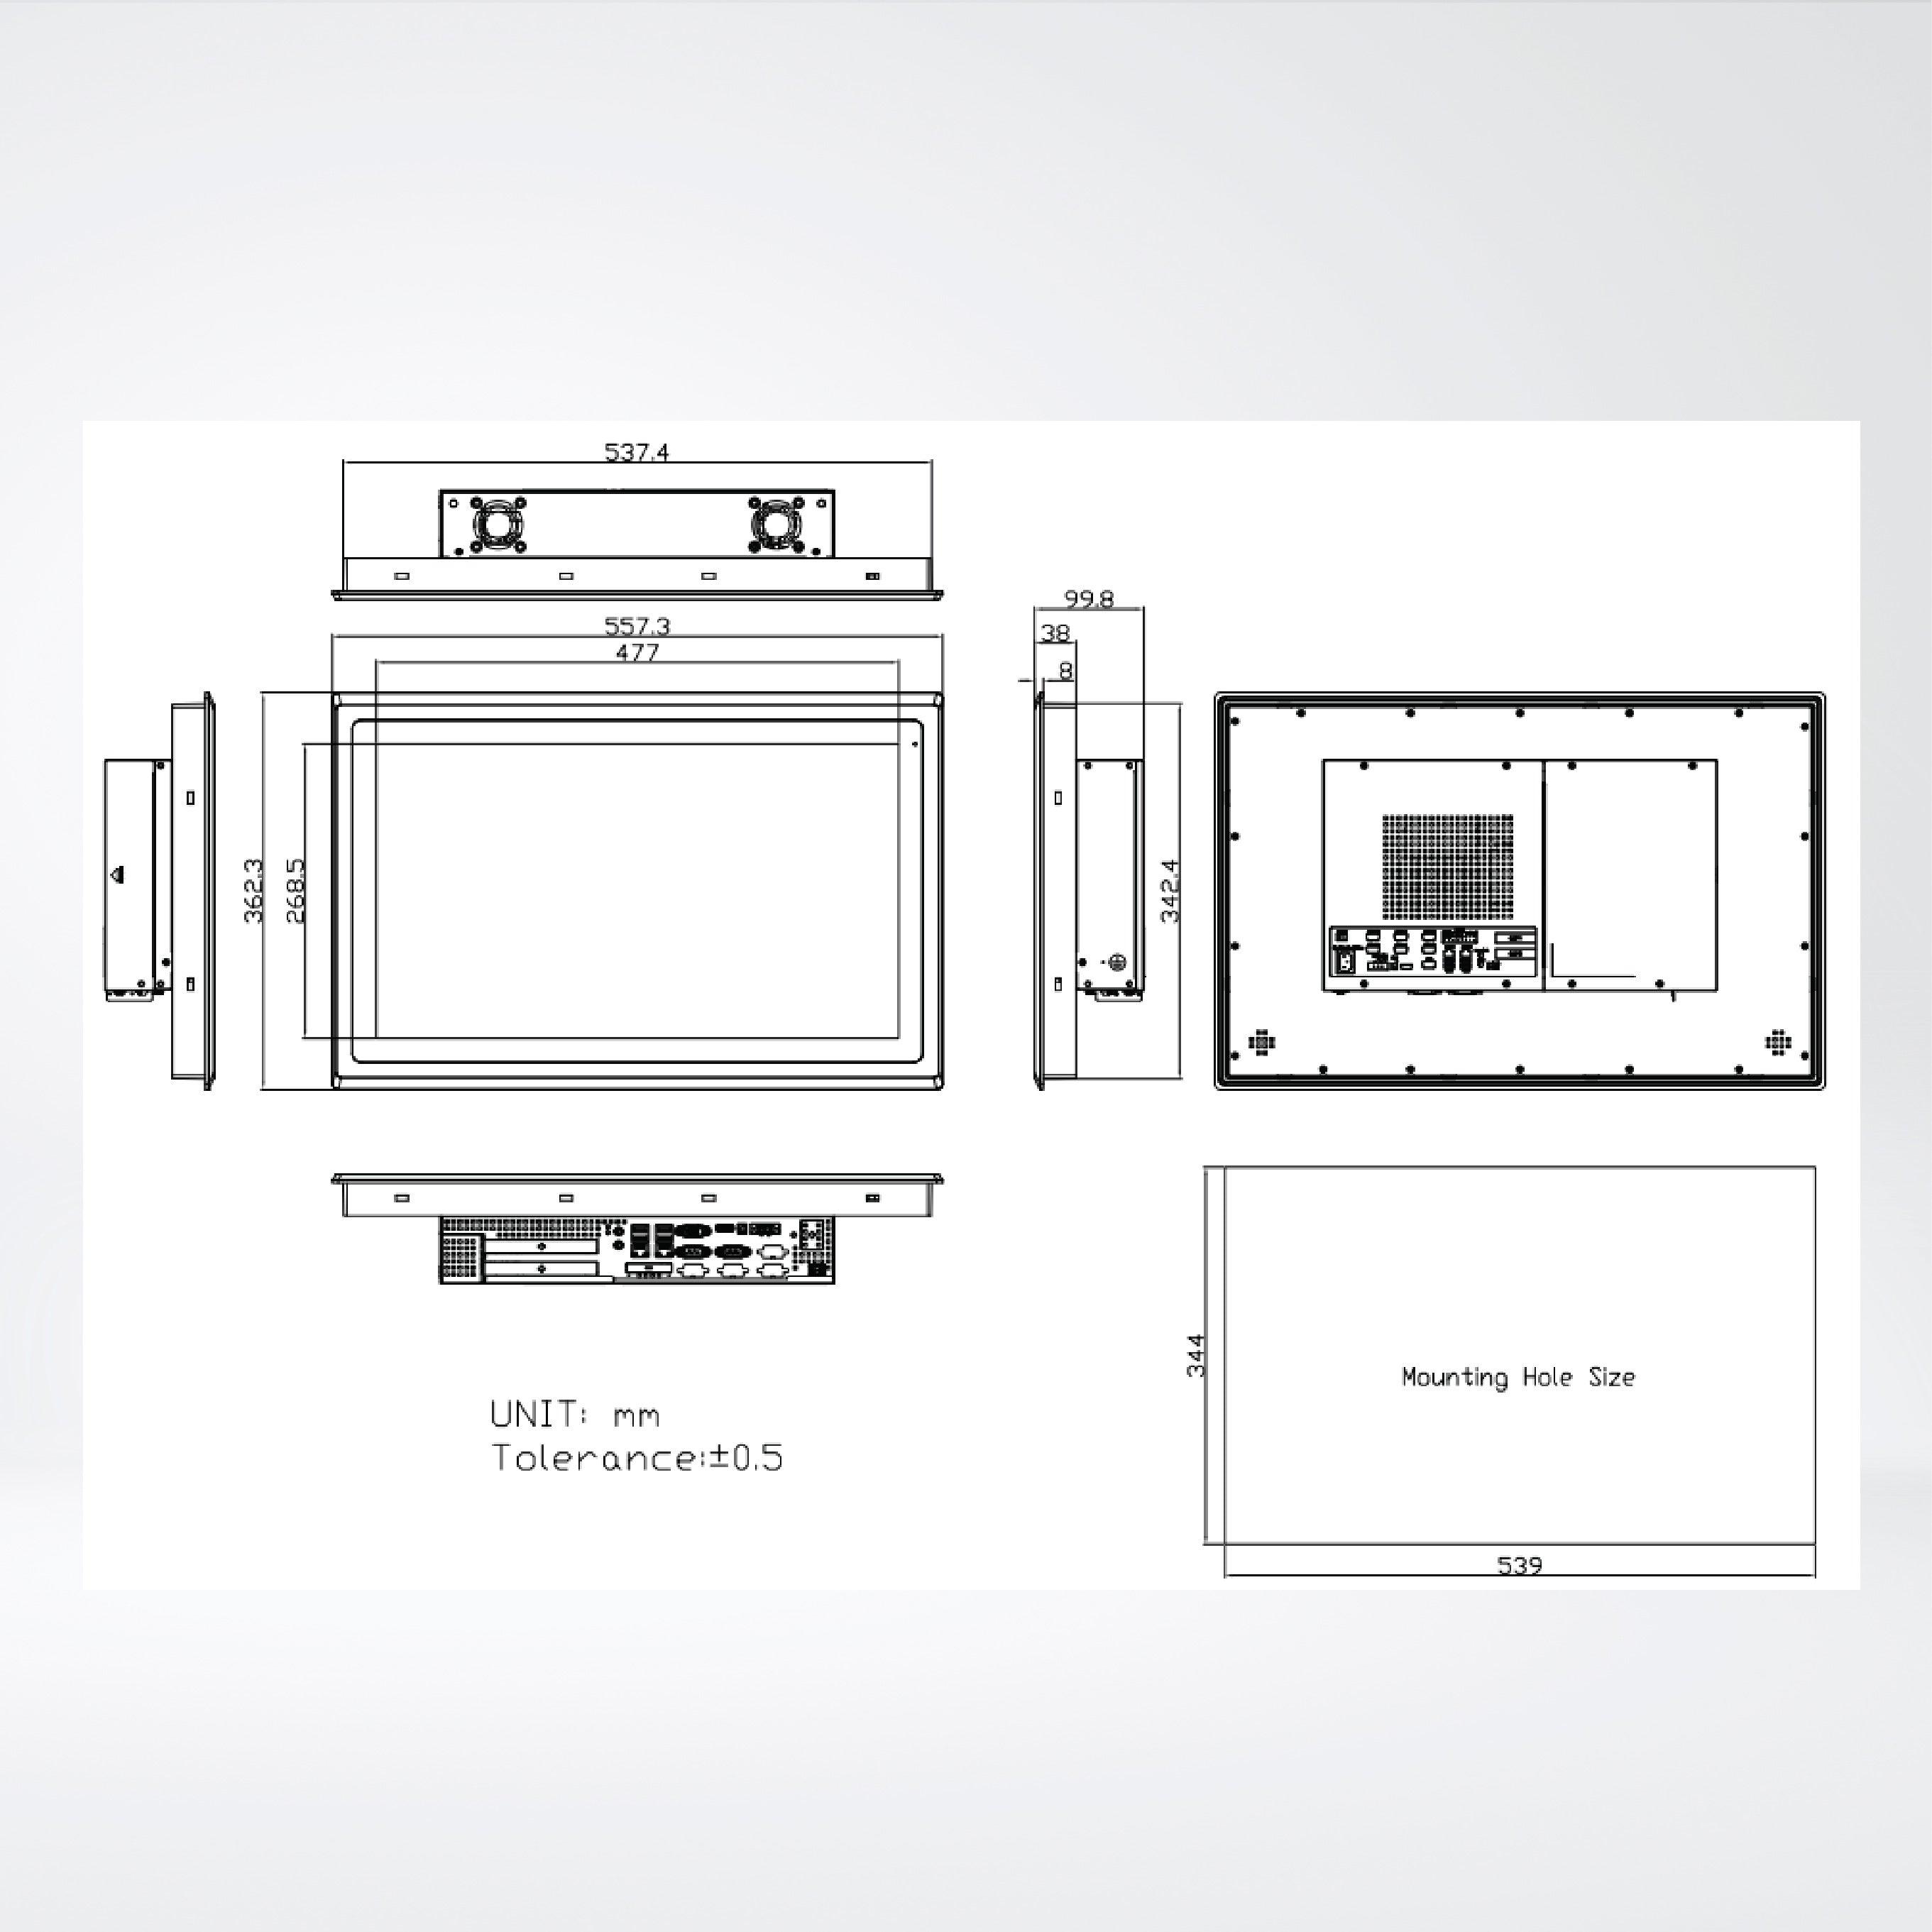 ViPAC-821RH 21.5” Intel Celeron N2930 Fanless Expandable Panel PC - Riverplus